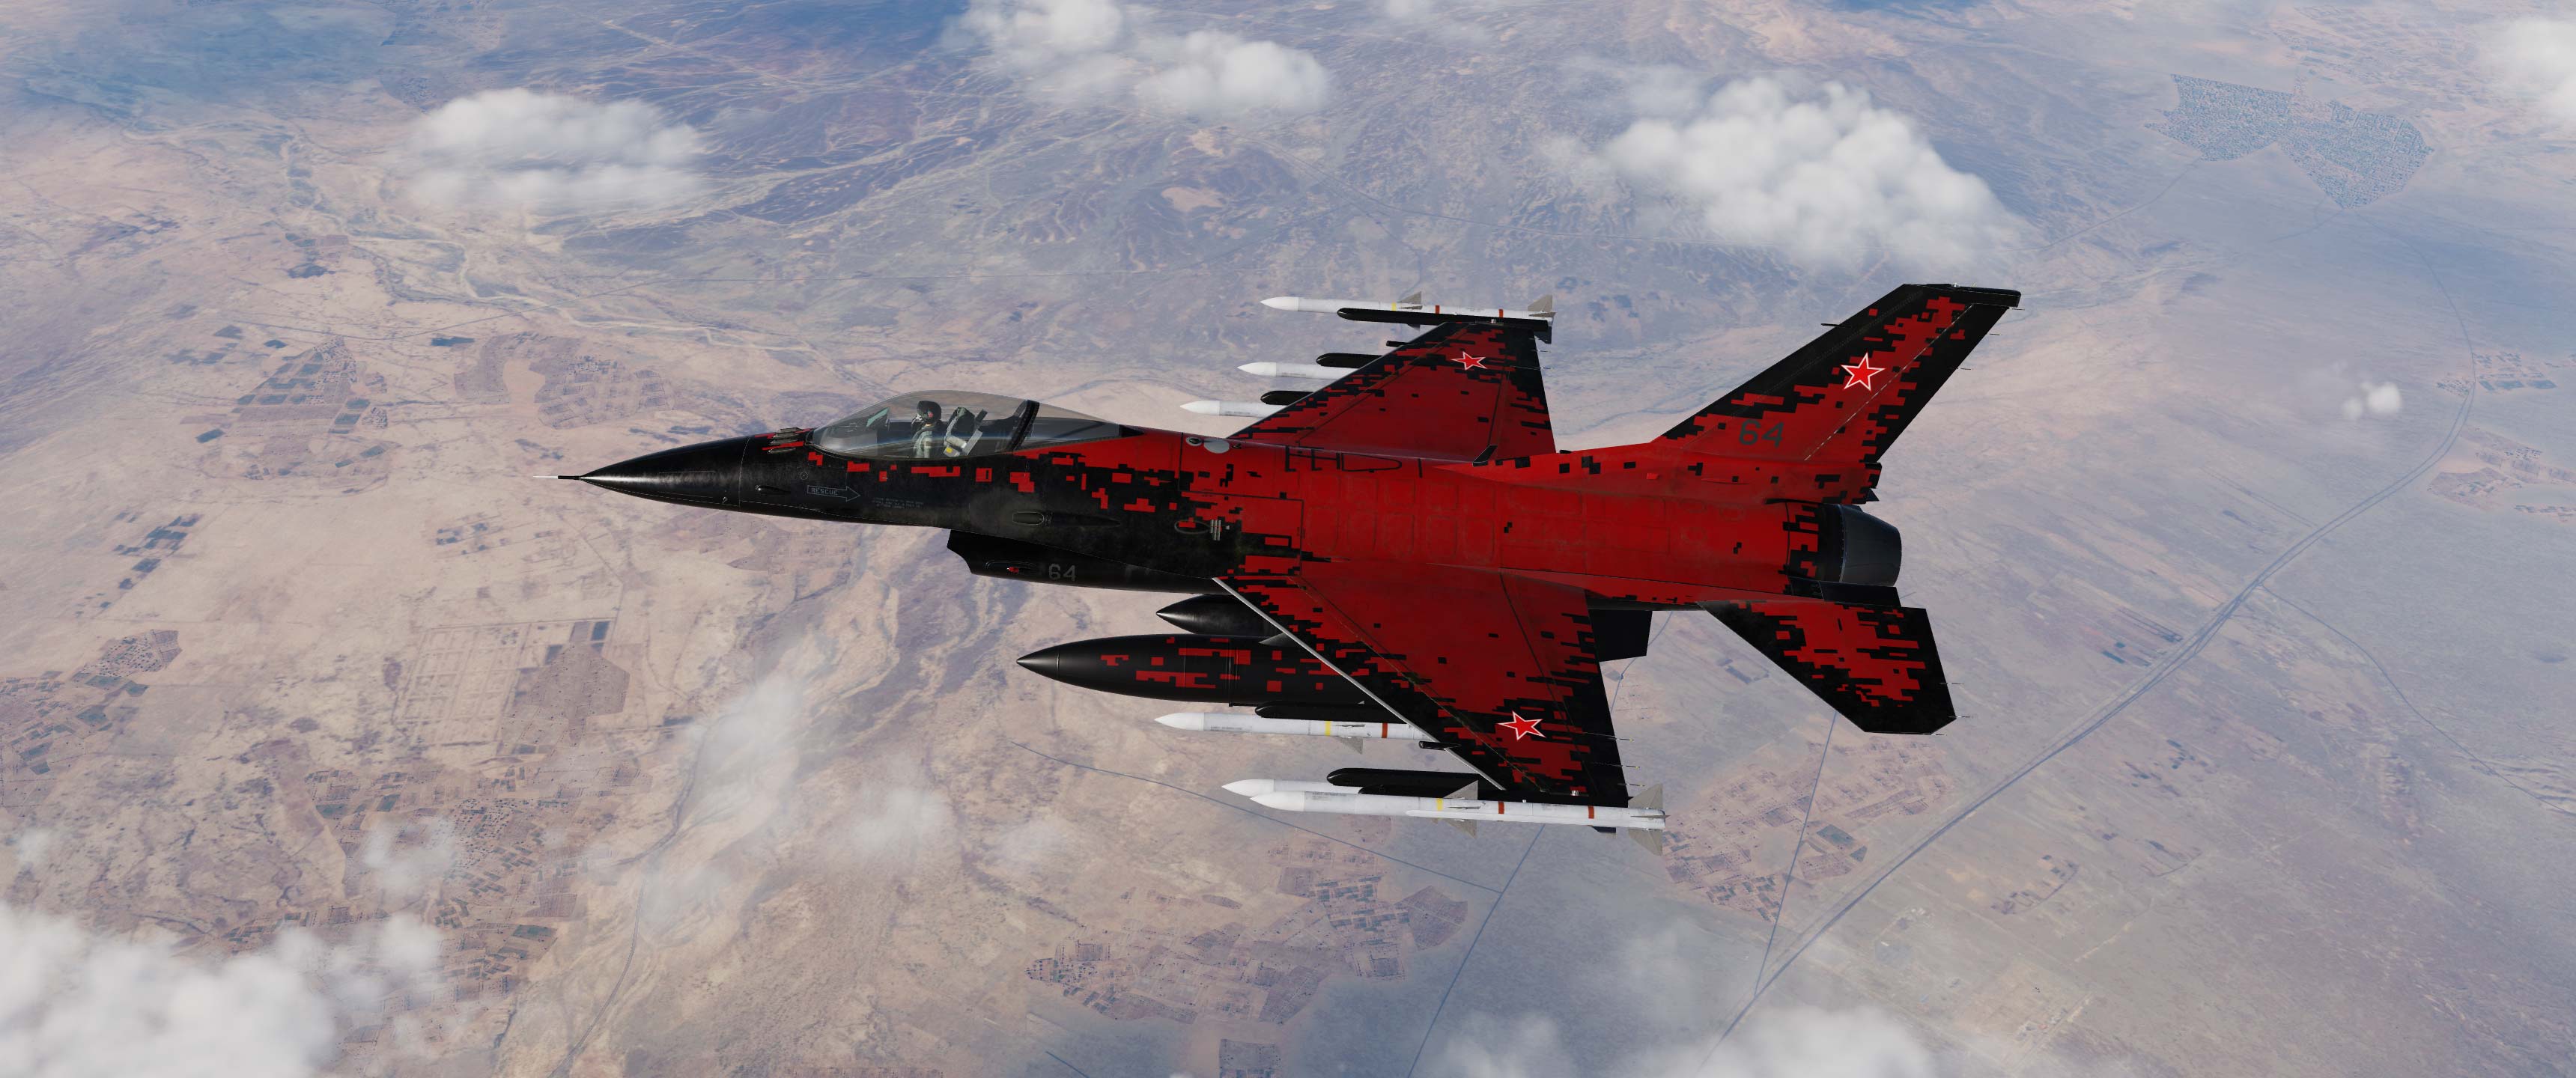 F16 Agressor & Red Agressor FELON